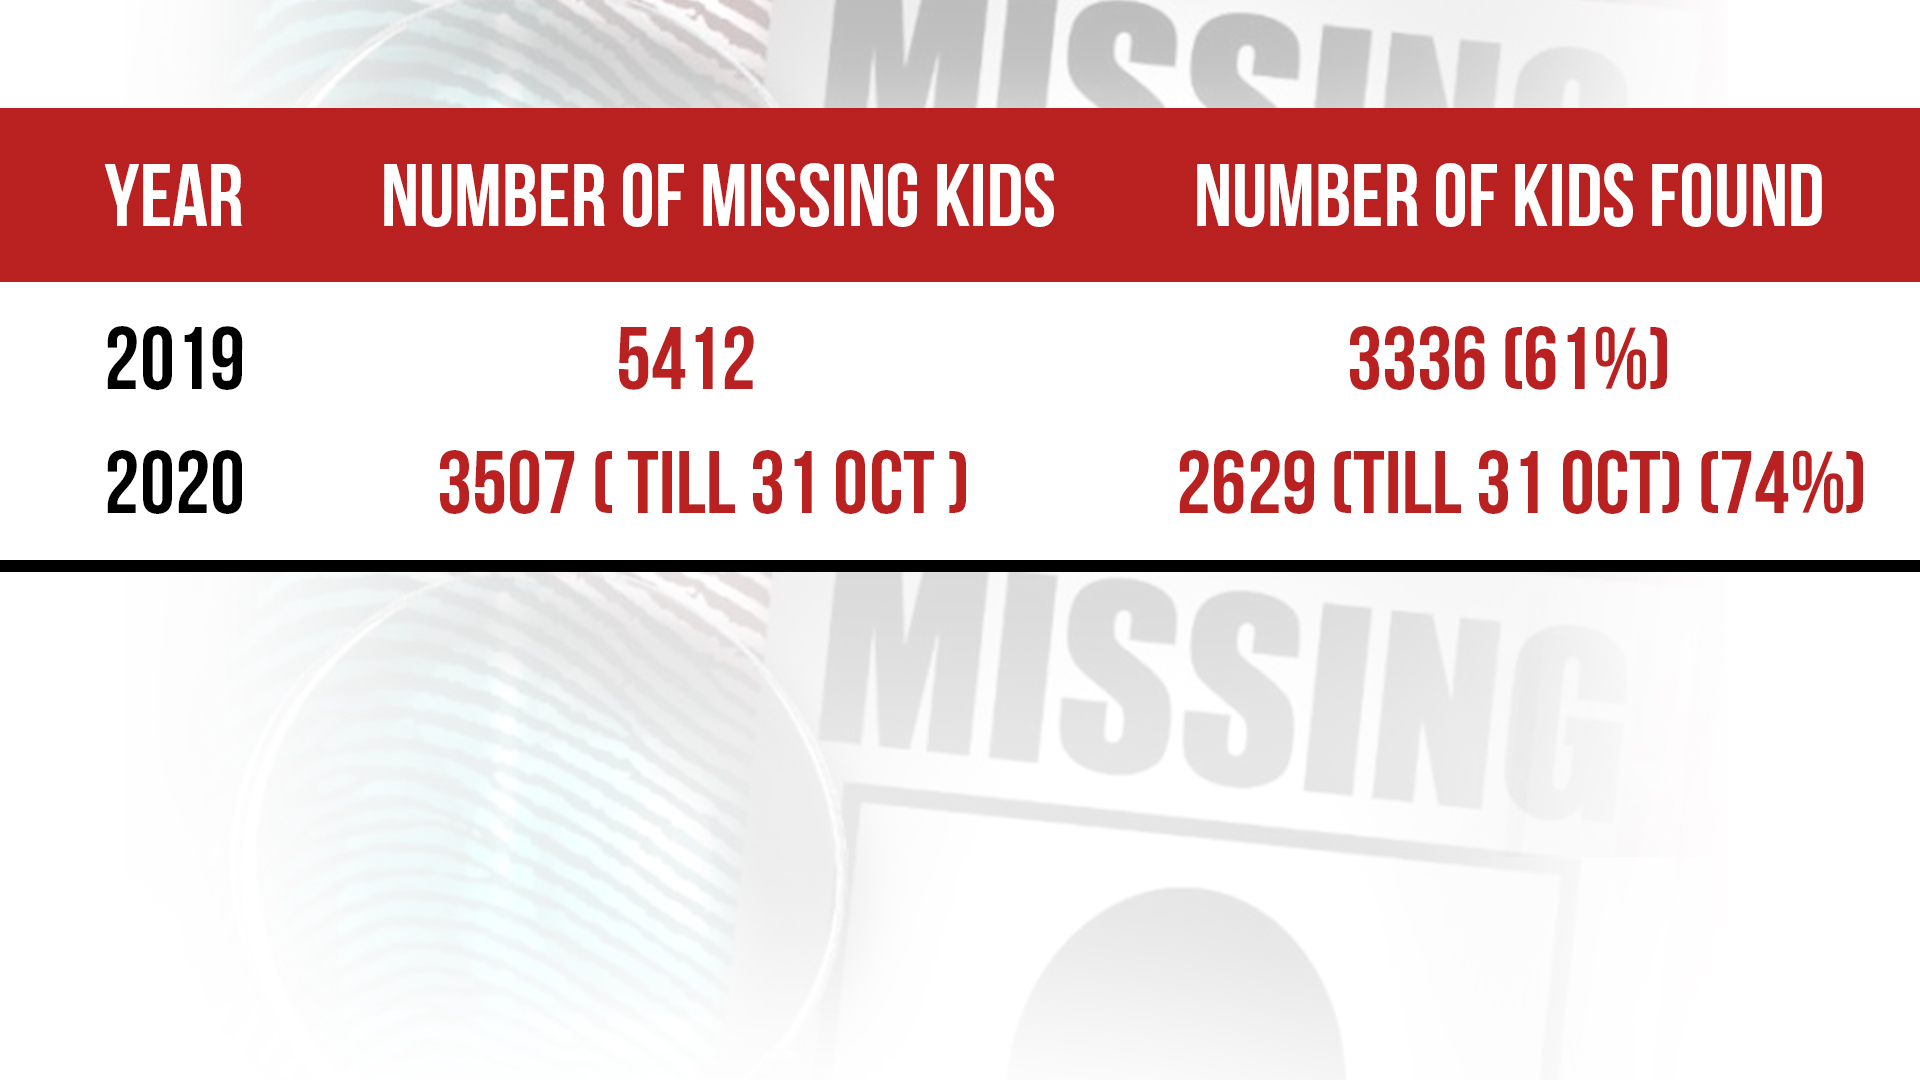 15 children go missing in Delhi daily, say police